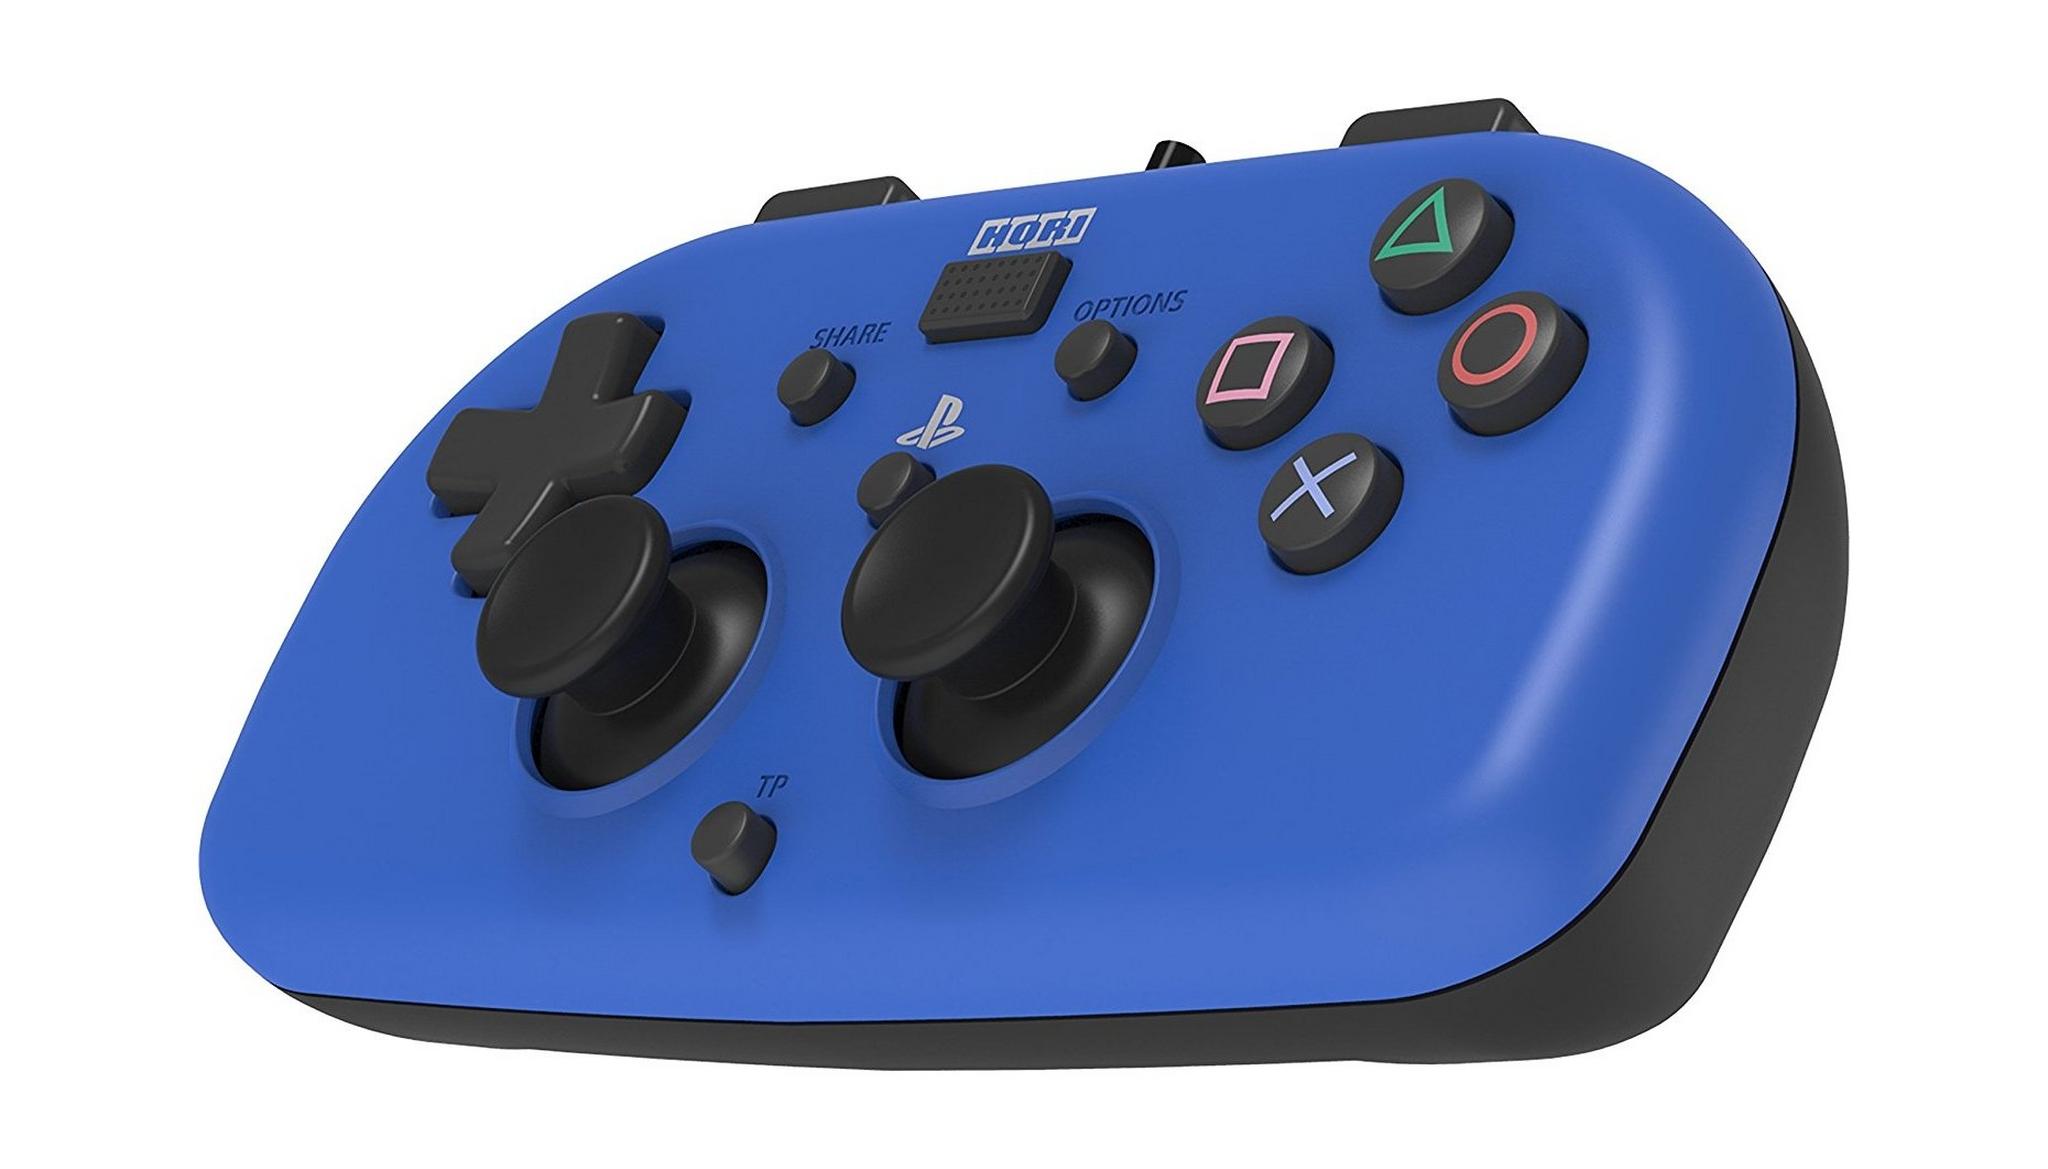 HORIPAD Wired MINI Gamepad PlayStation 4 Controller - Blue